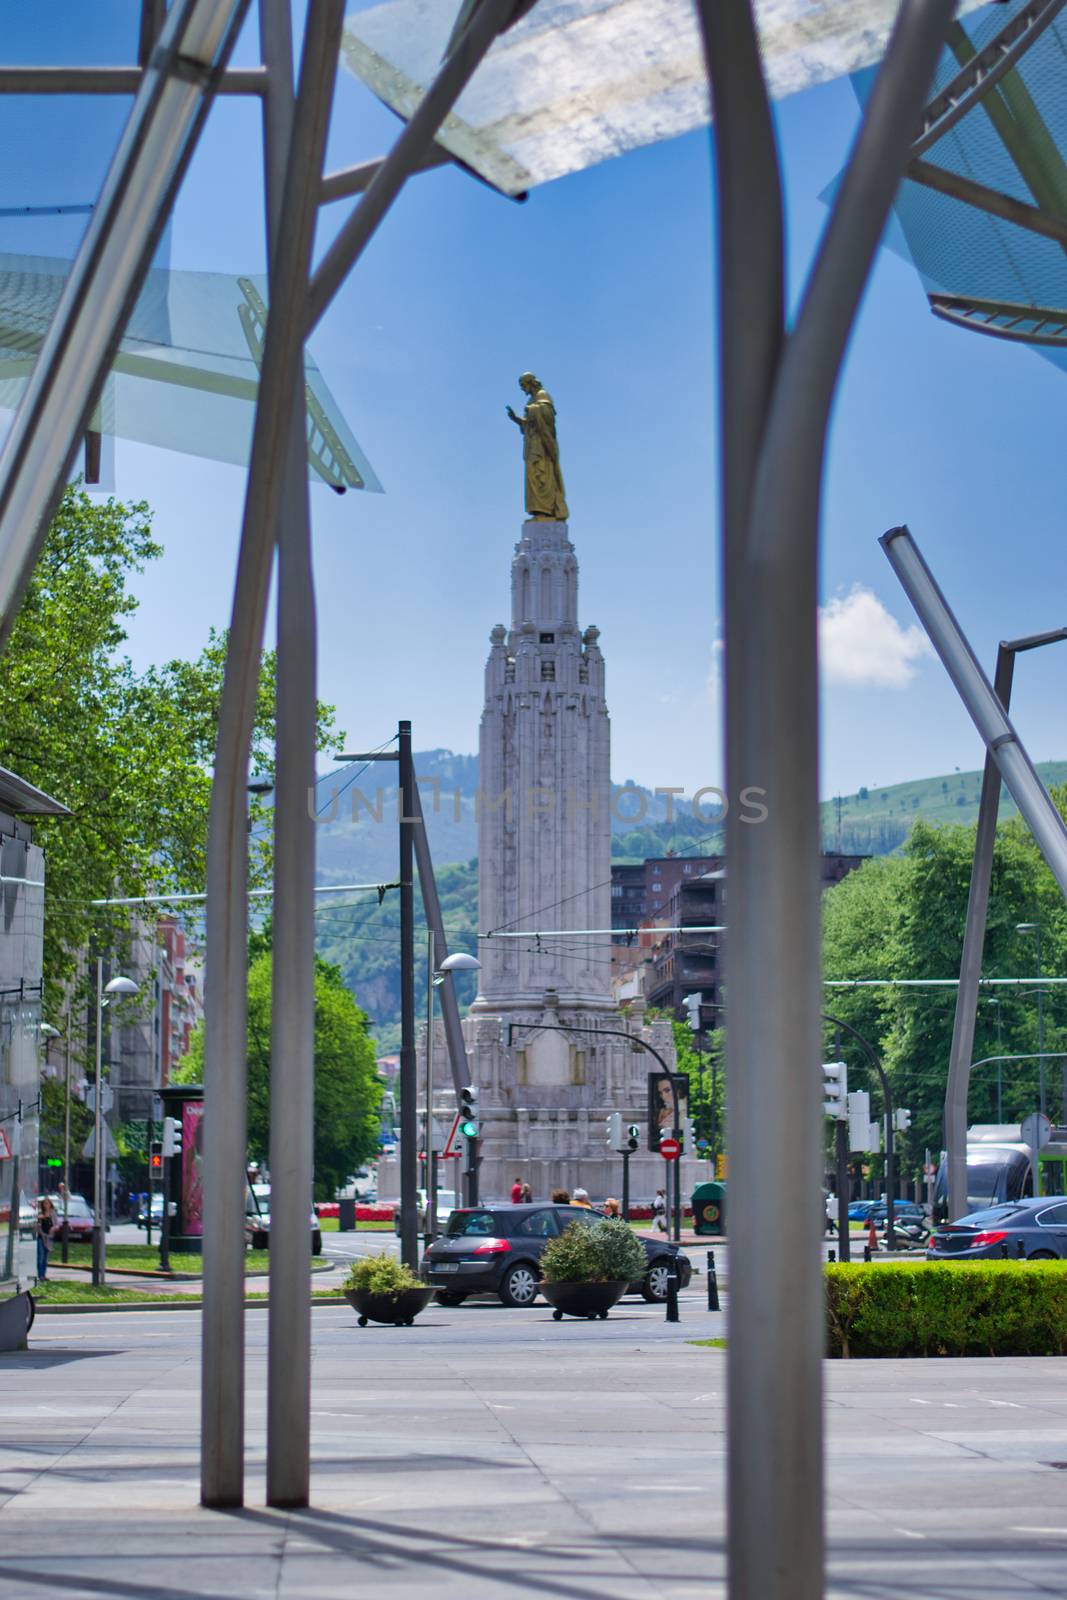 View on Monumento al Sagrado Corazon de Jesus statue at Jesusen Bihotza Plaza in Bilbao, Spain. by kb79